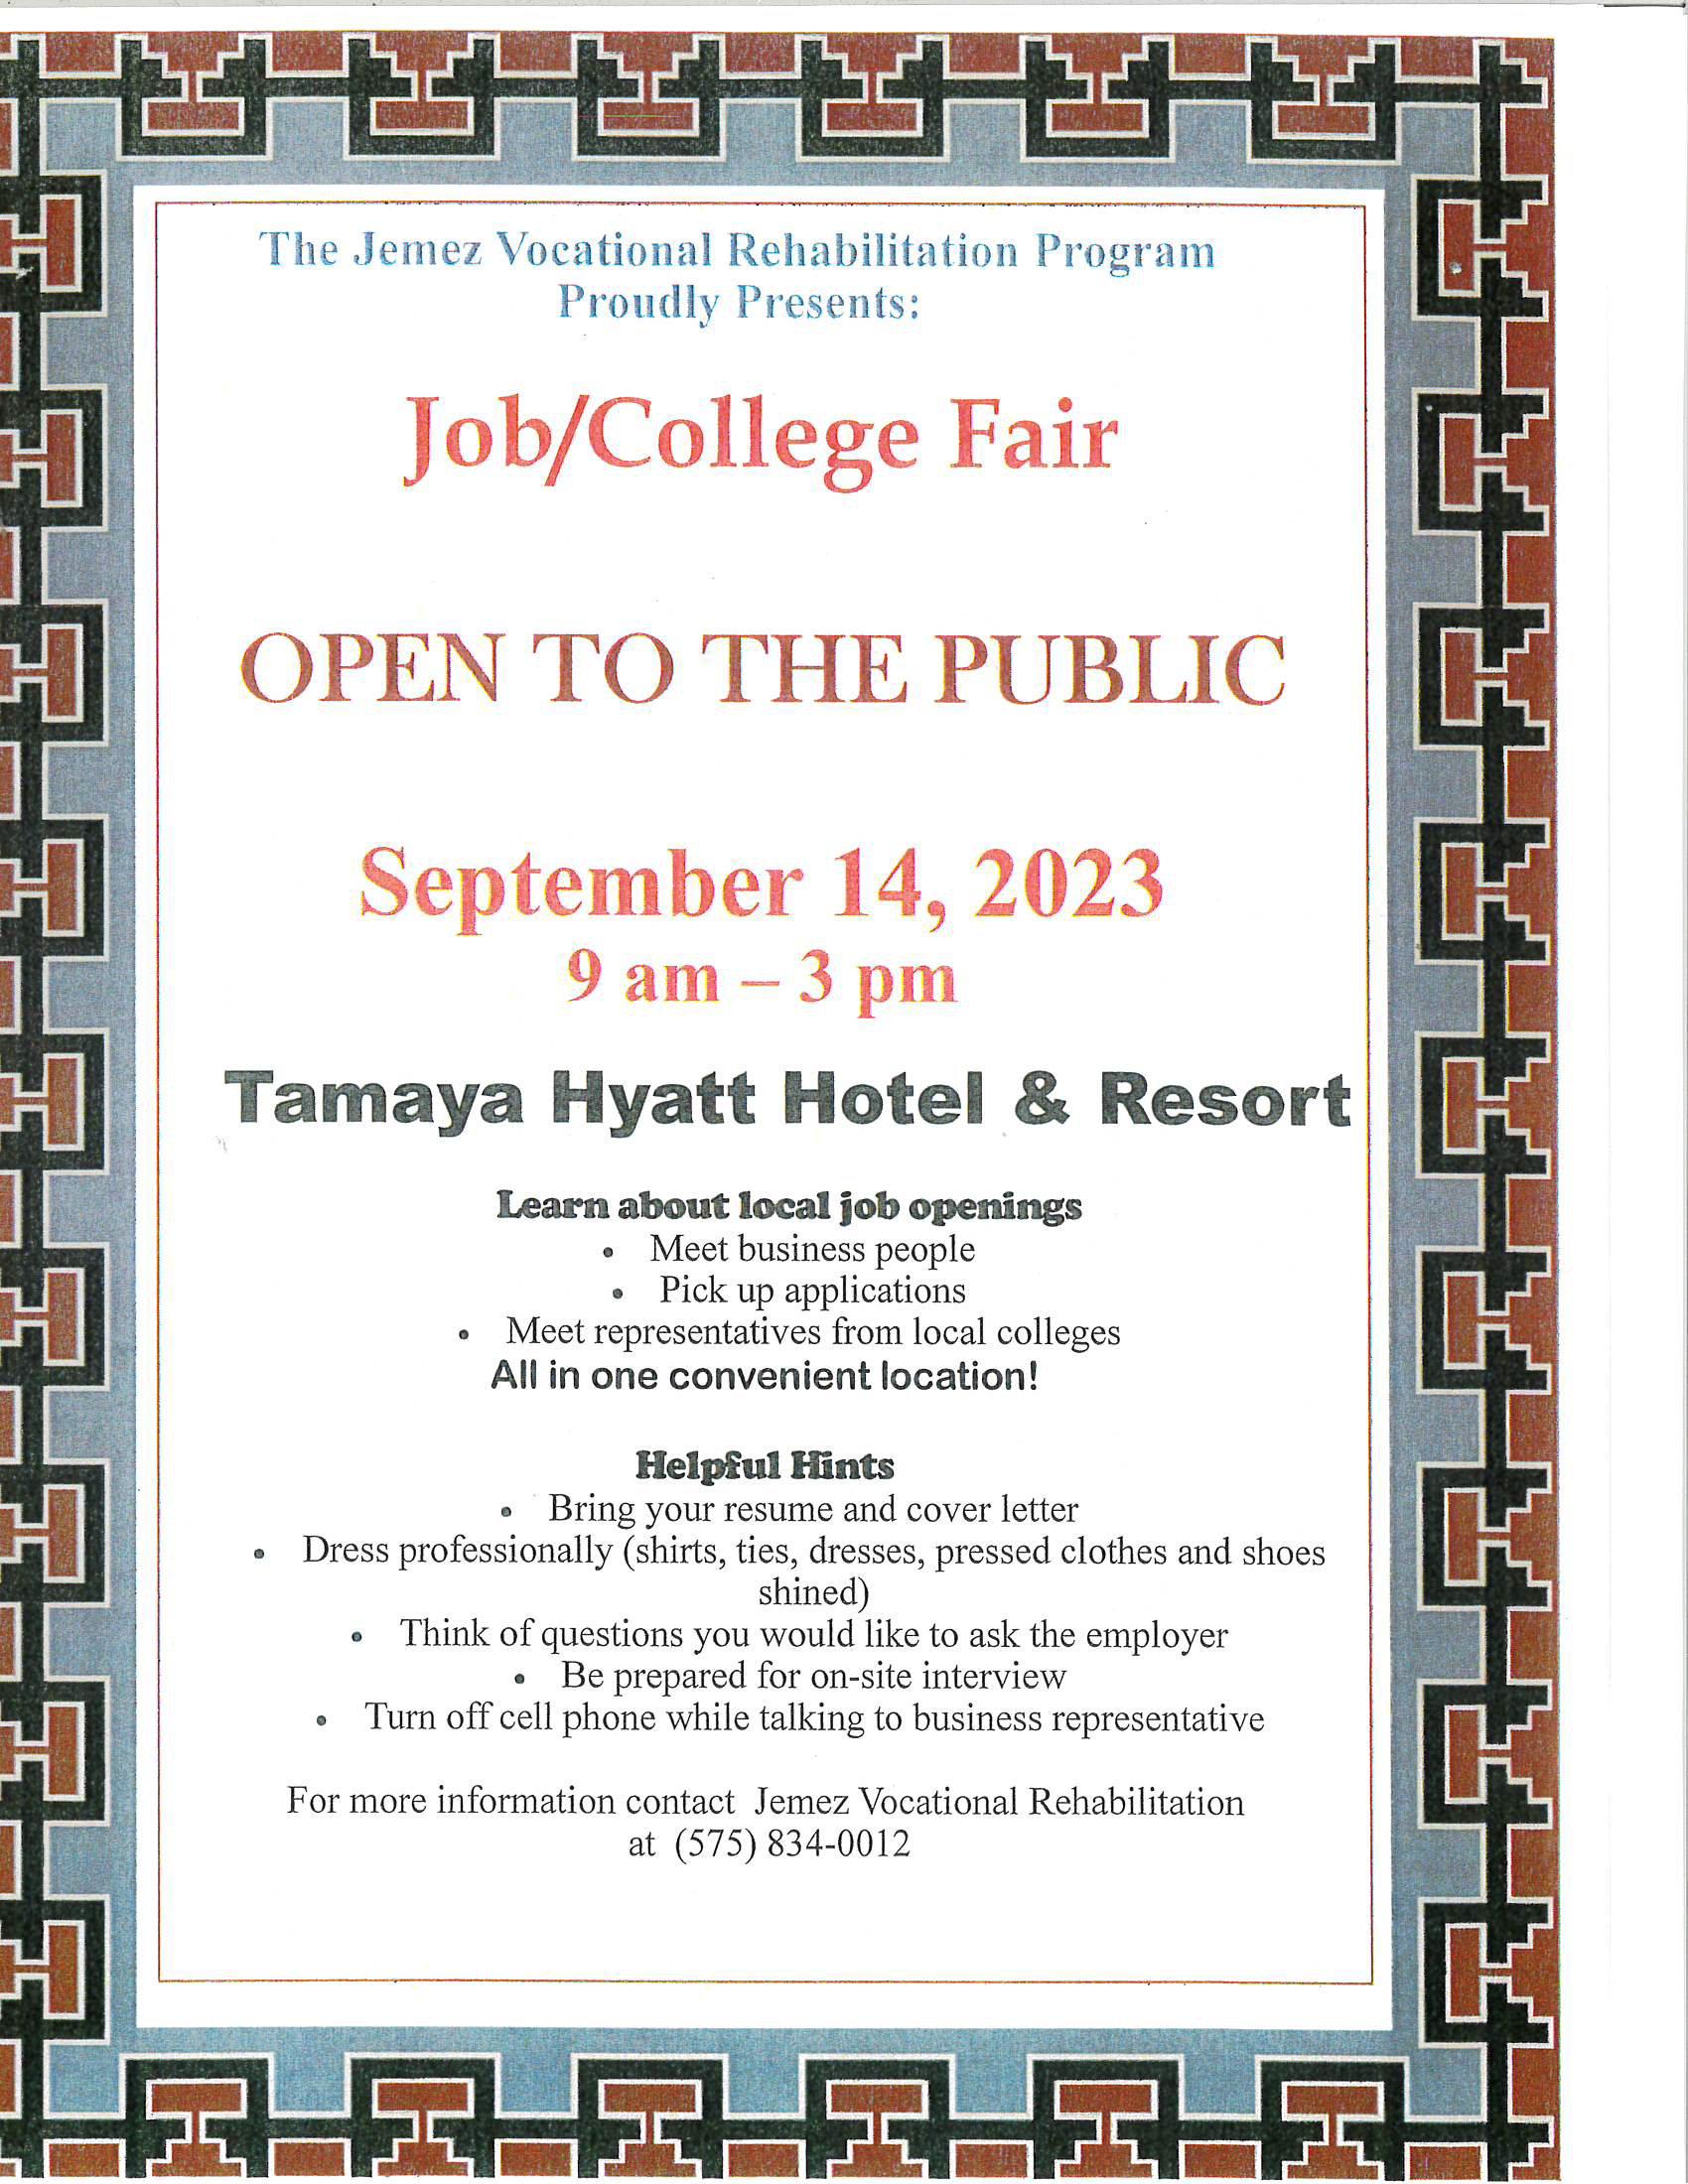 Jemez Vocational Rehabilitation Program presents: Job/College Fair flyer